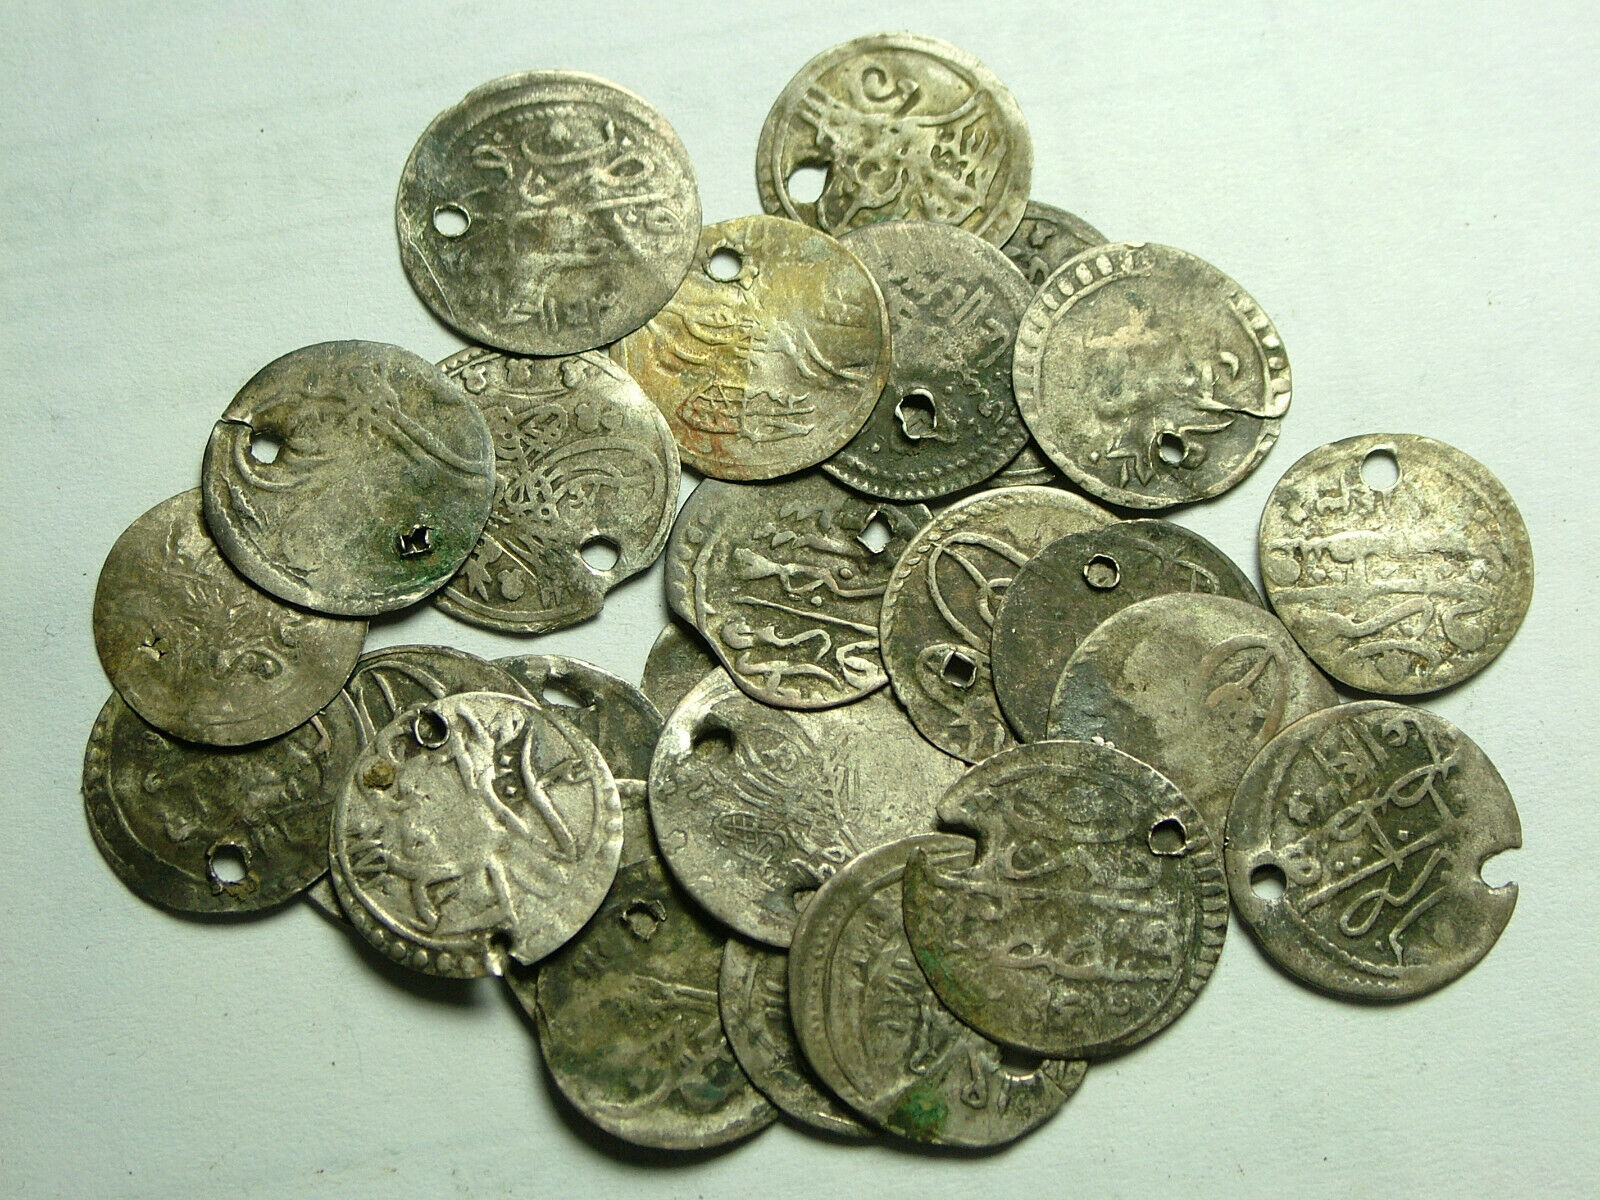 Lot 5 original Islamic silver para coins/Ottoman Empire Abdul Hamid Selim Mahmud Без бренда - фотография #10